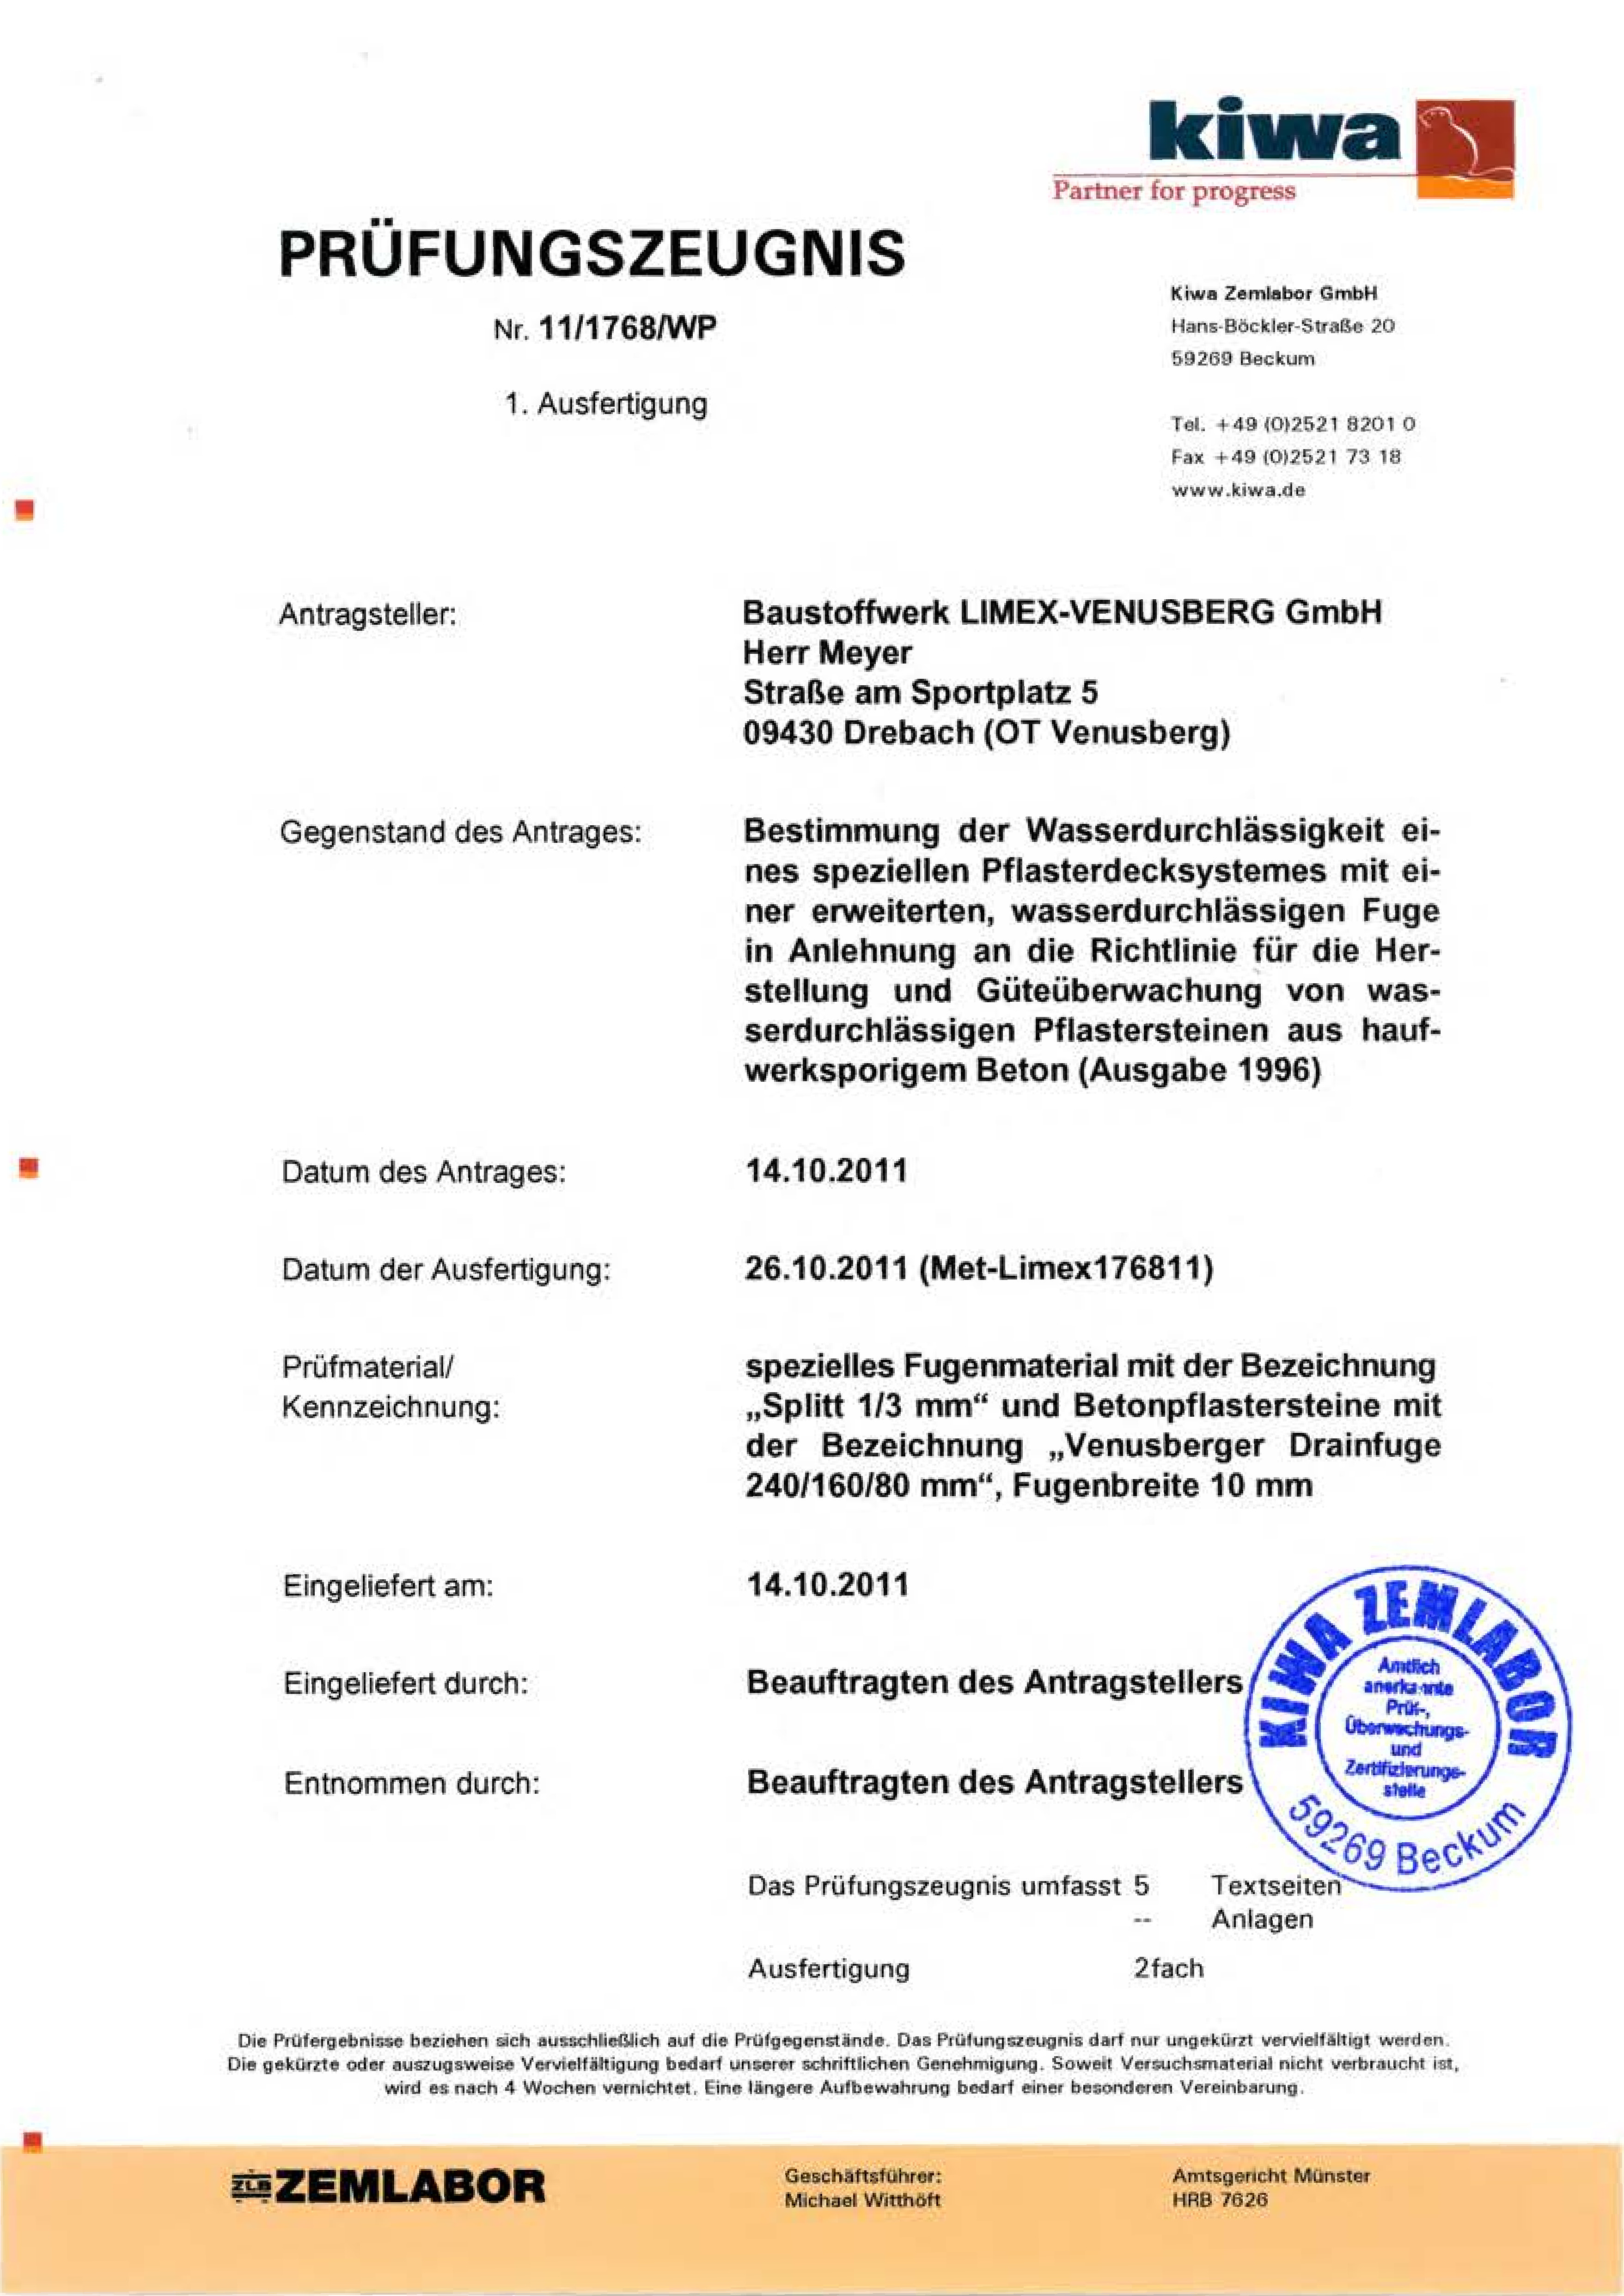 LIMEX Infocenter Pruefzeugnis 11 1768 WP Venusberger Drainfugenpflaster pdf